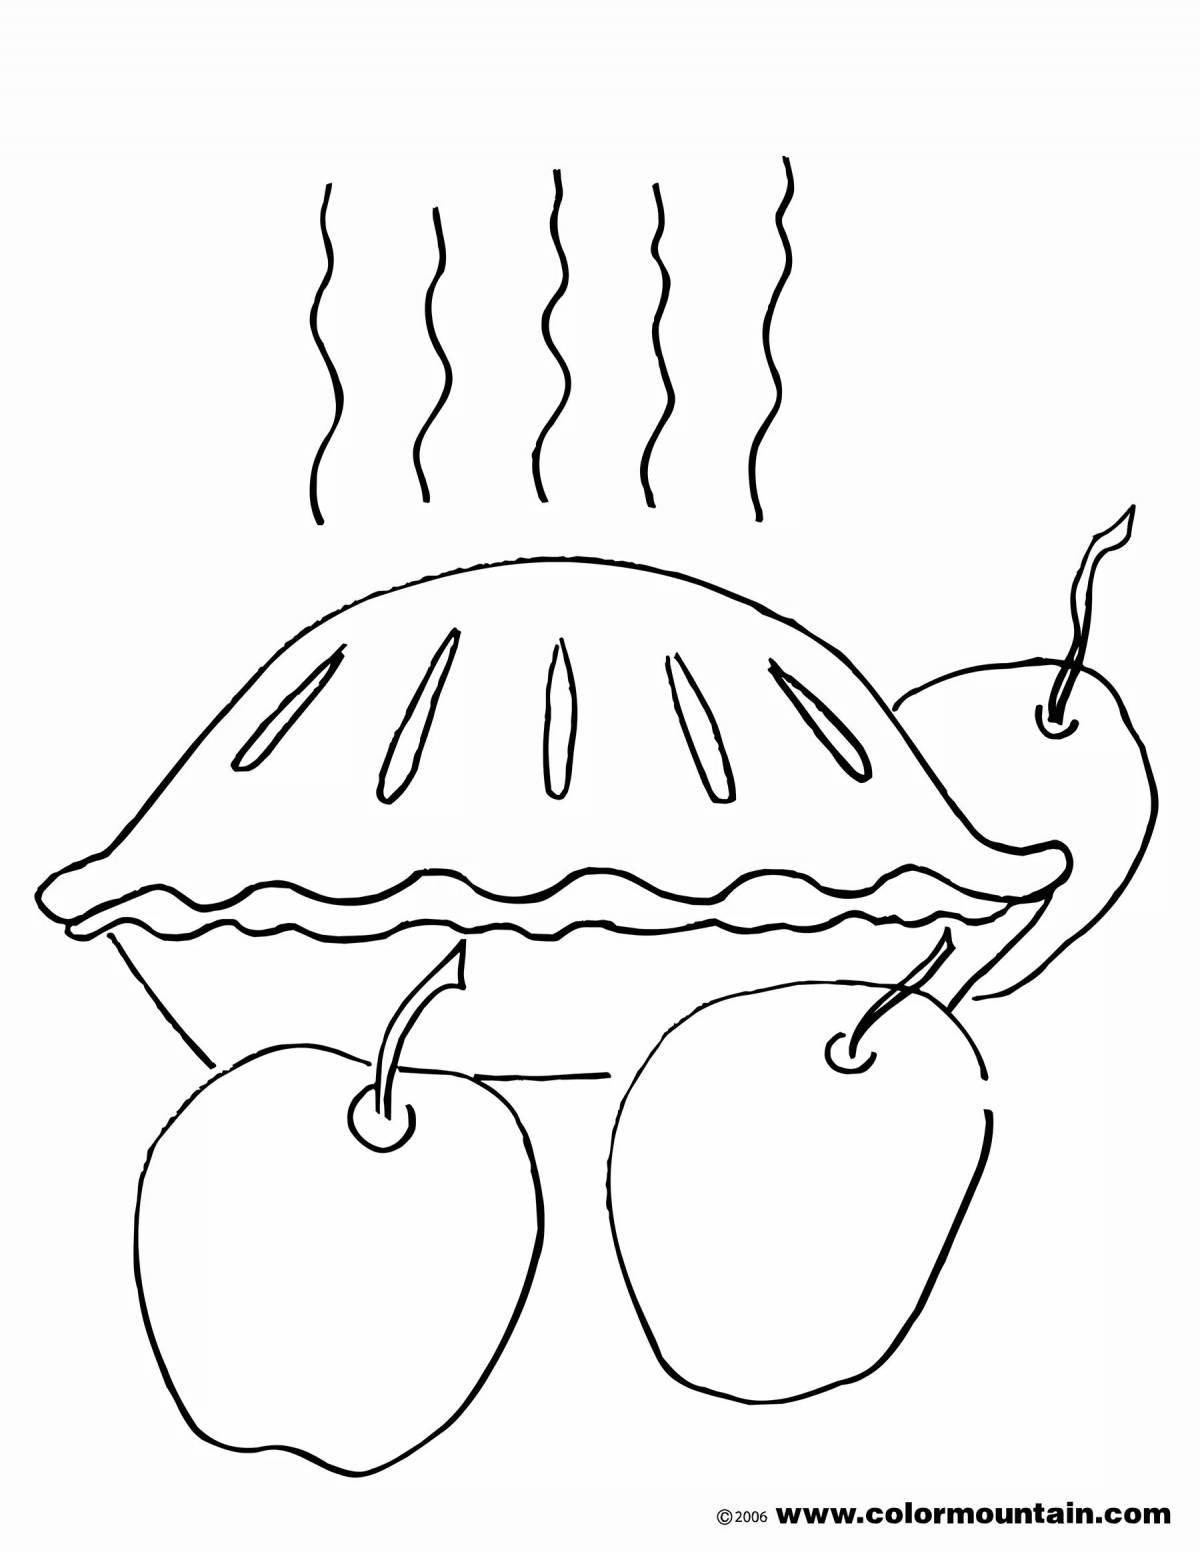 Apple pie invitation coloring book